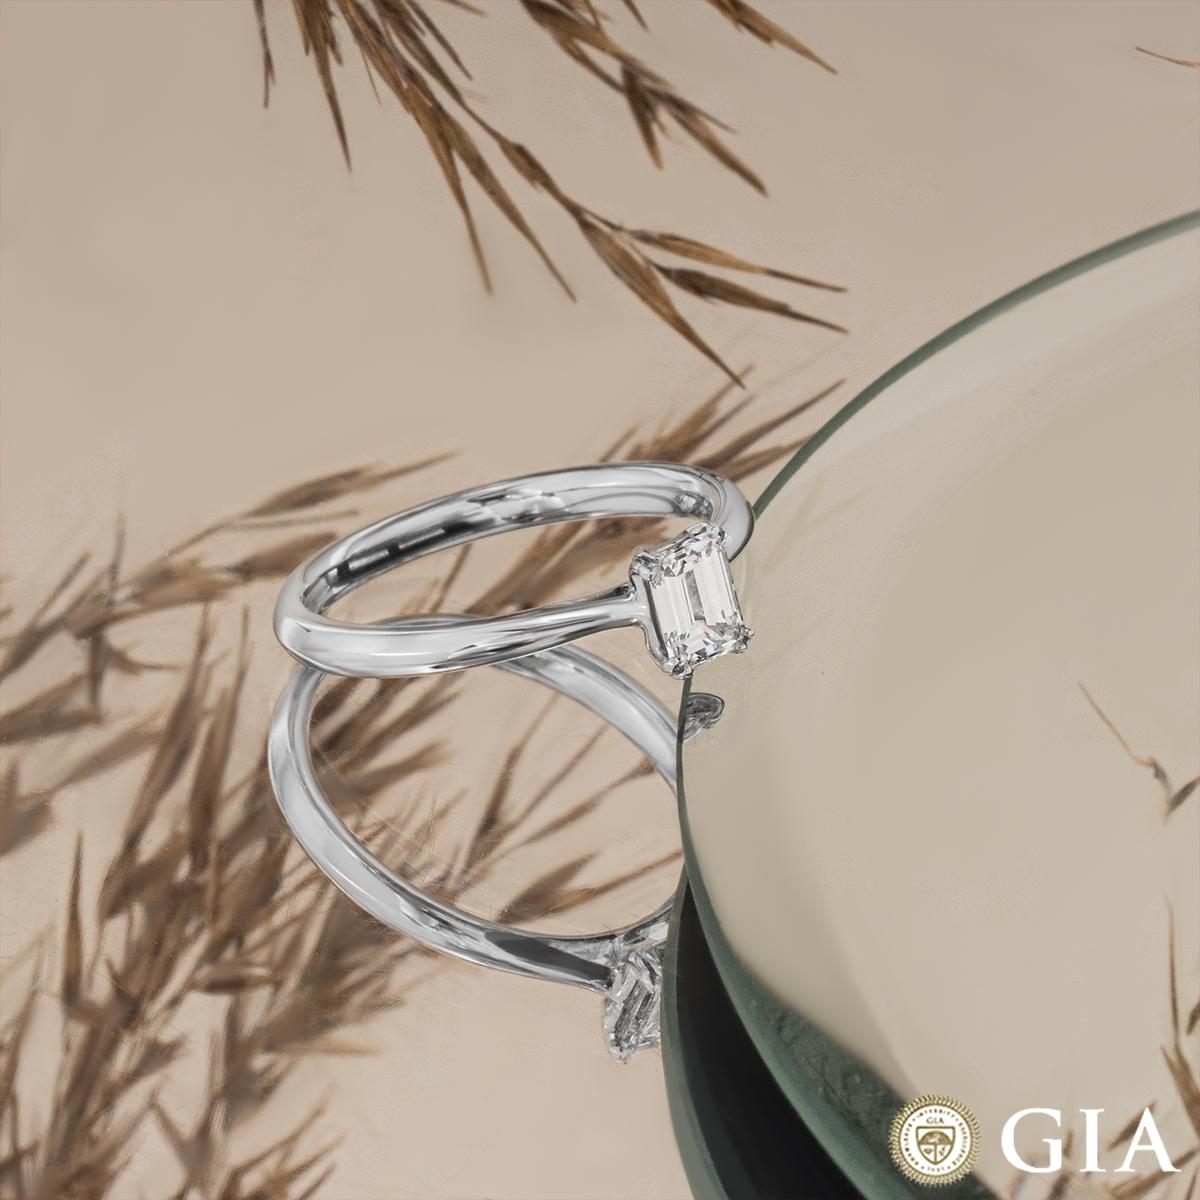 GIA Certified White Gold Emerald Cut Diamond Ring 0.43ct E/VS2 For Sale 4